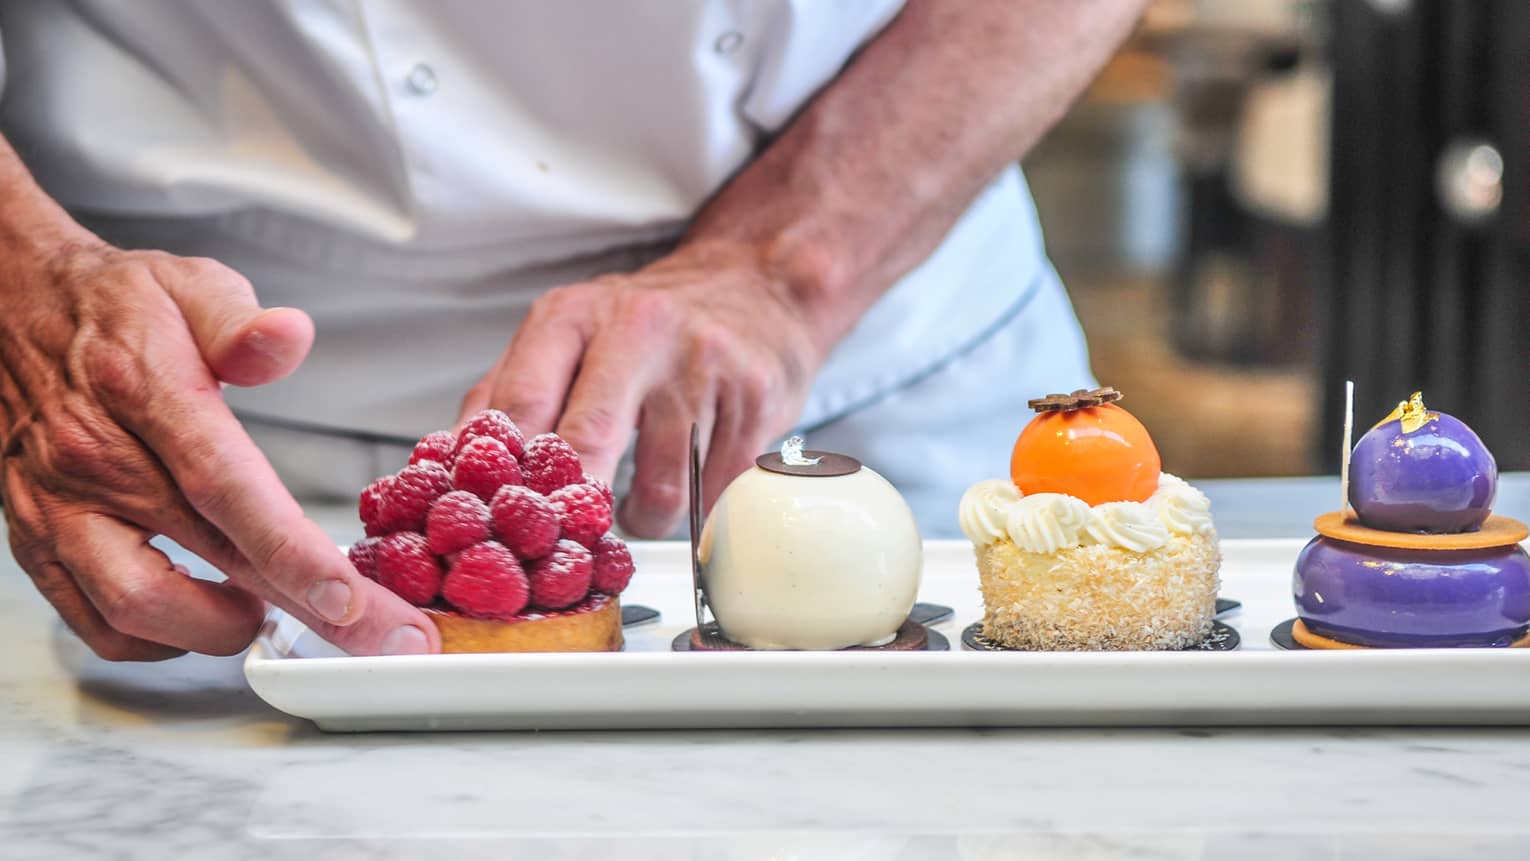 Pastry chef arranges gourmet desserts on white platter